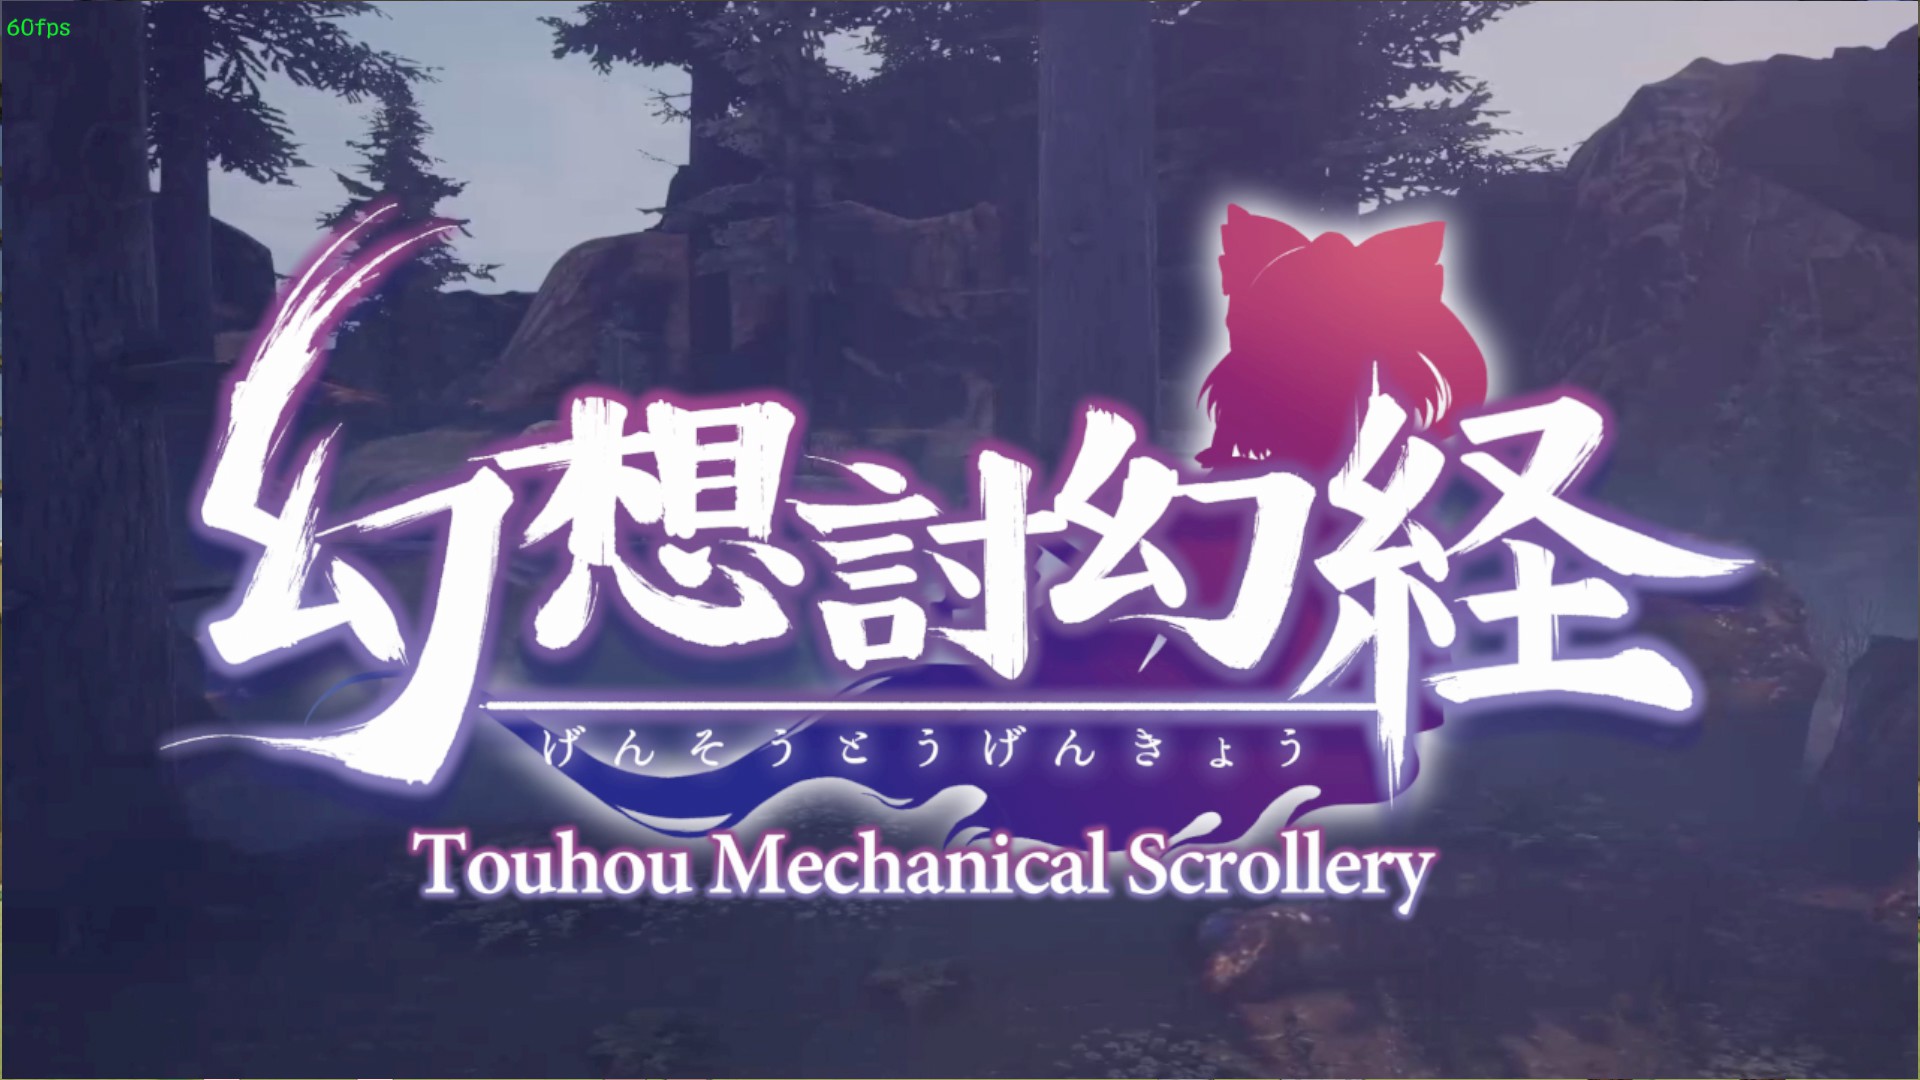 Análisis de Touhou Mechanical Scrollery